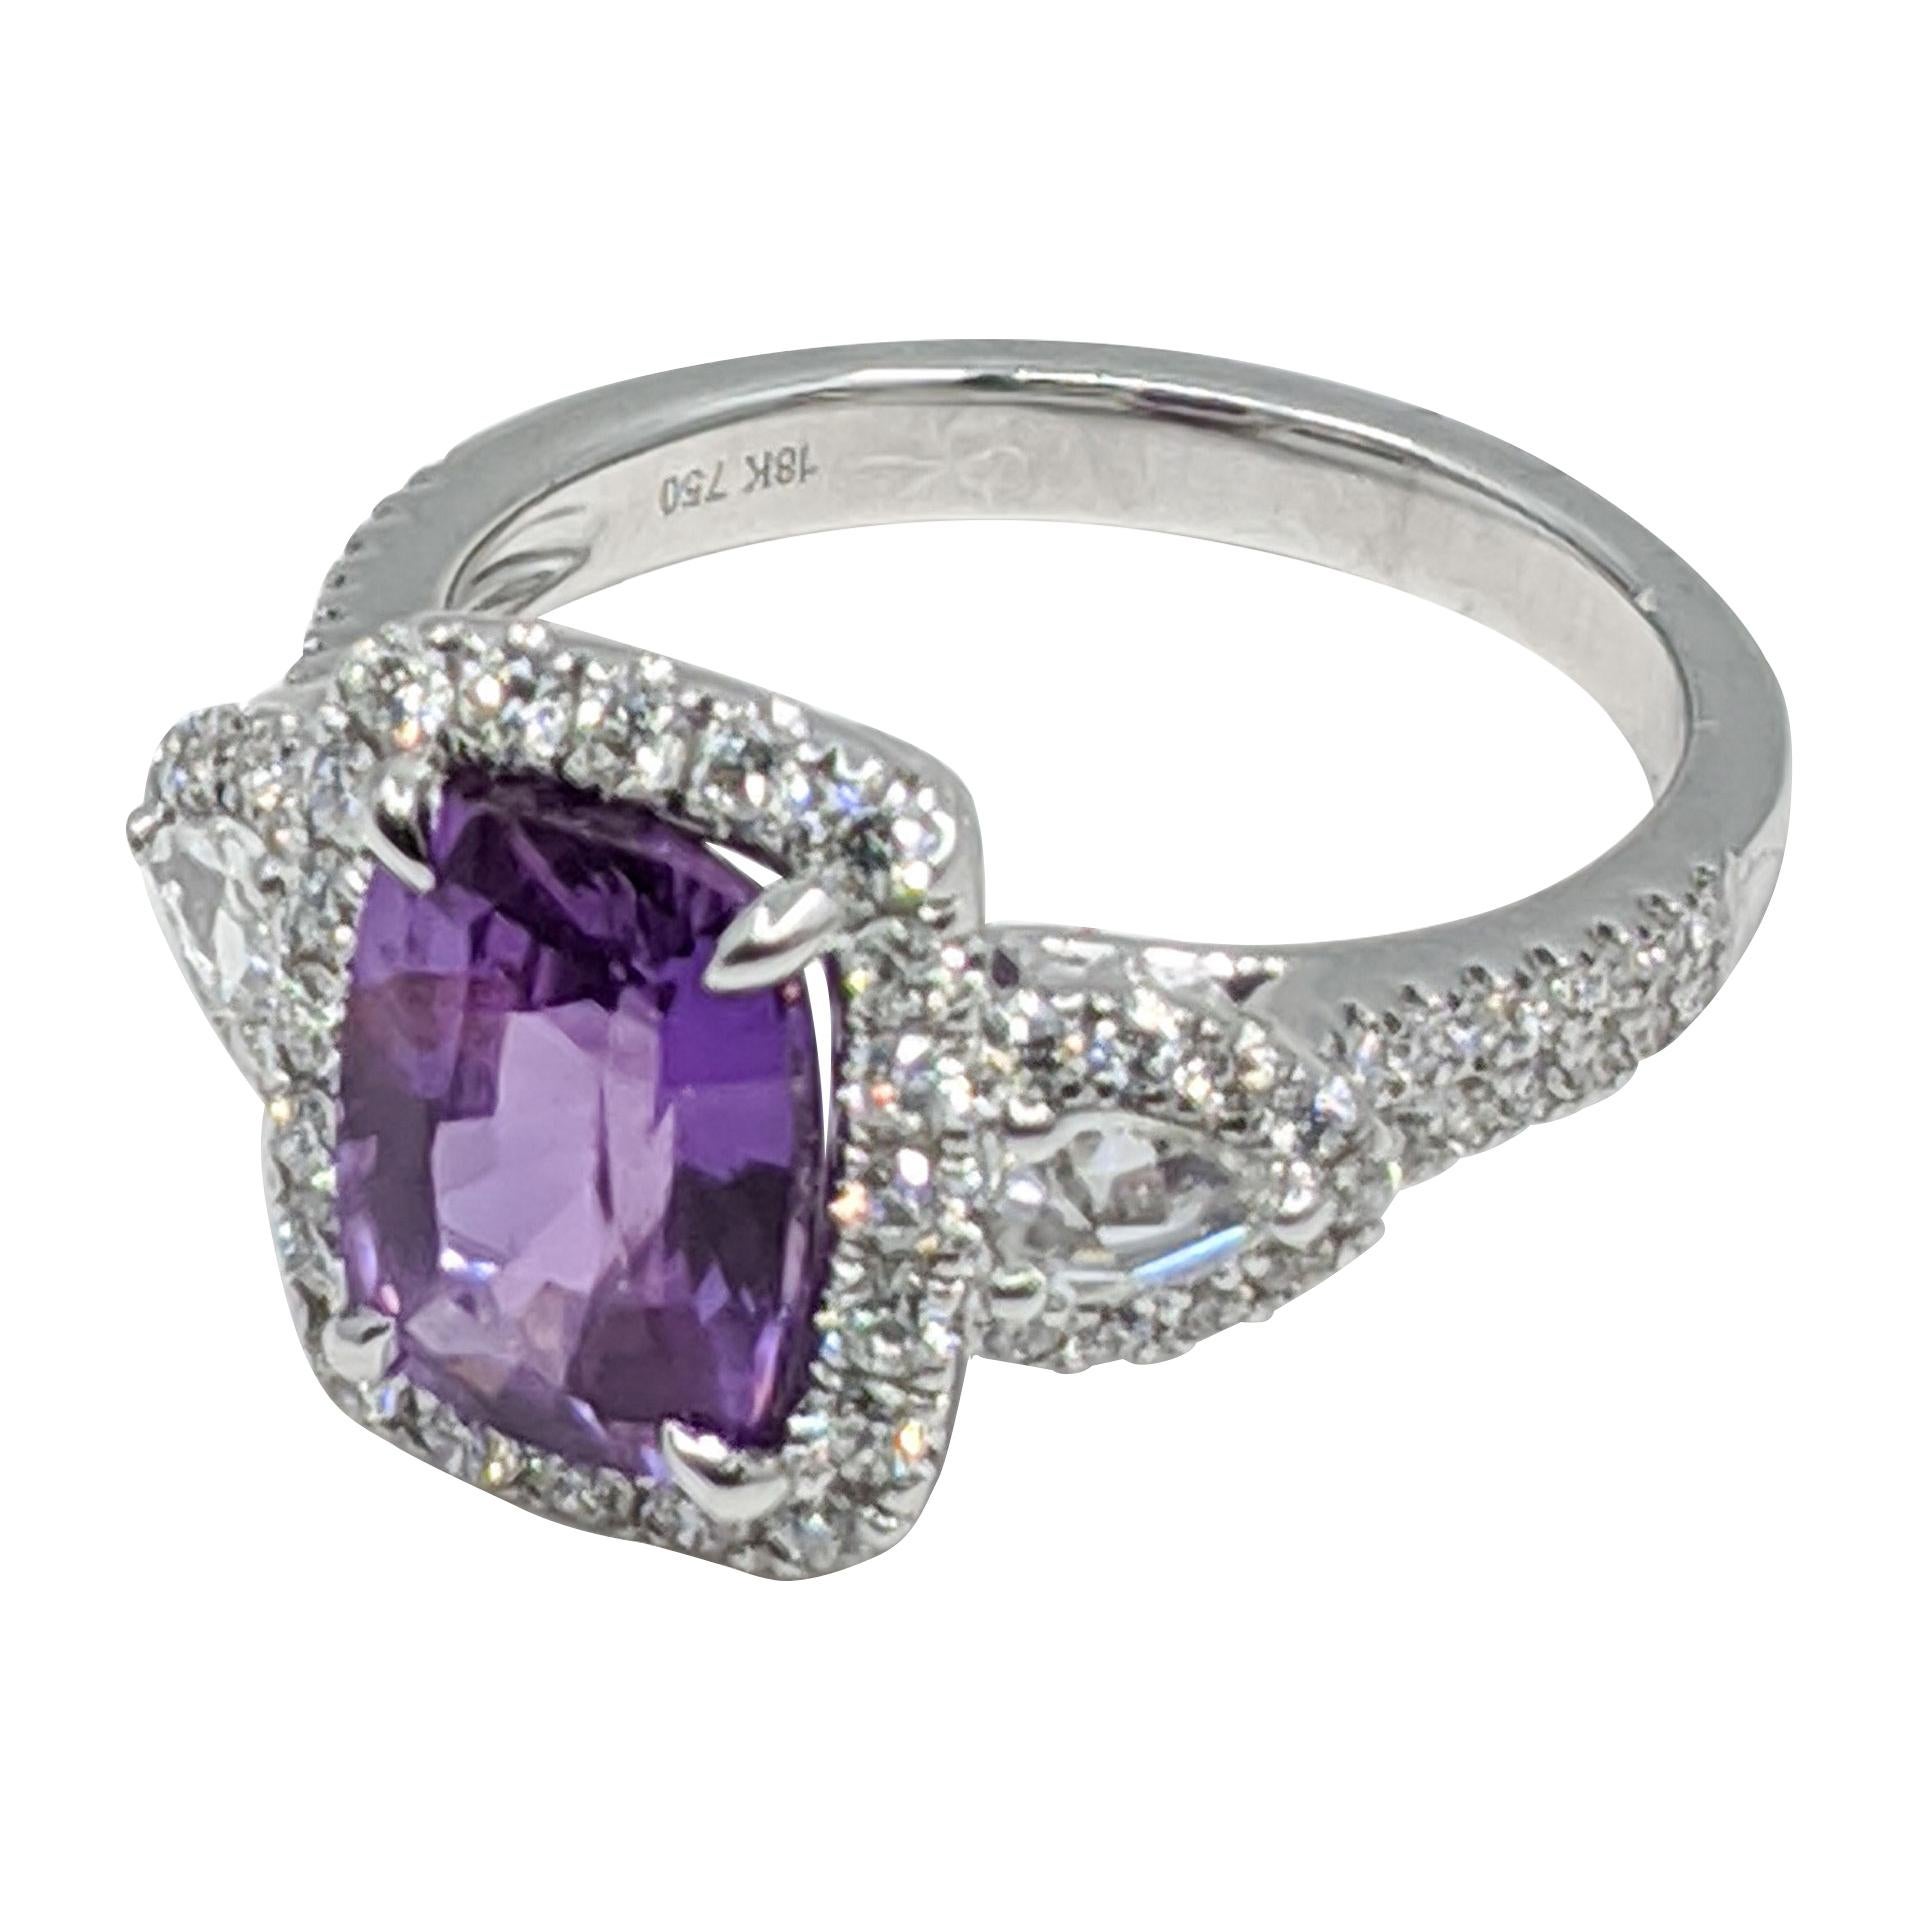 Lavender Sapphire (No heat) ring, with white diamond stones. 18k Gold
CENTER  3.06 CRTS   10X7MM
DIAMONDS  .77 CRTS